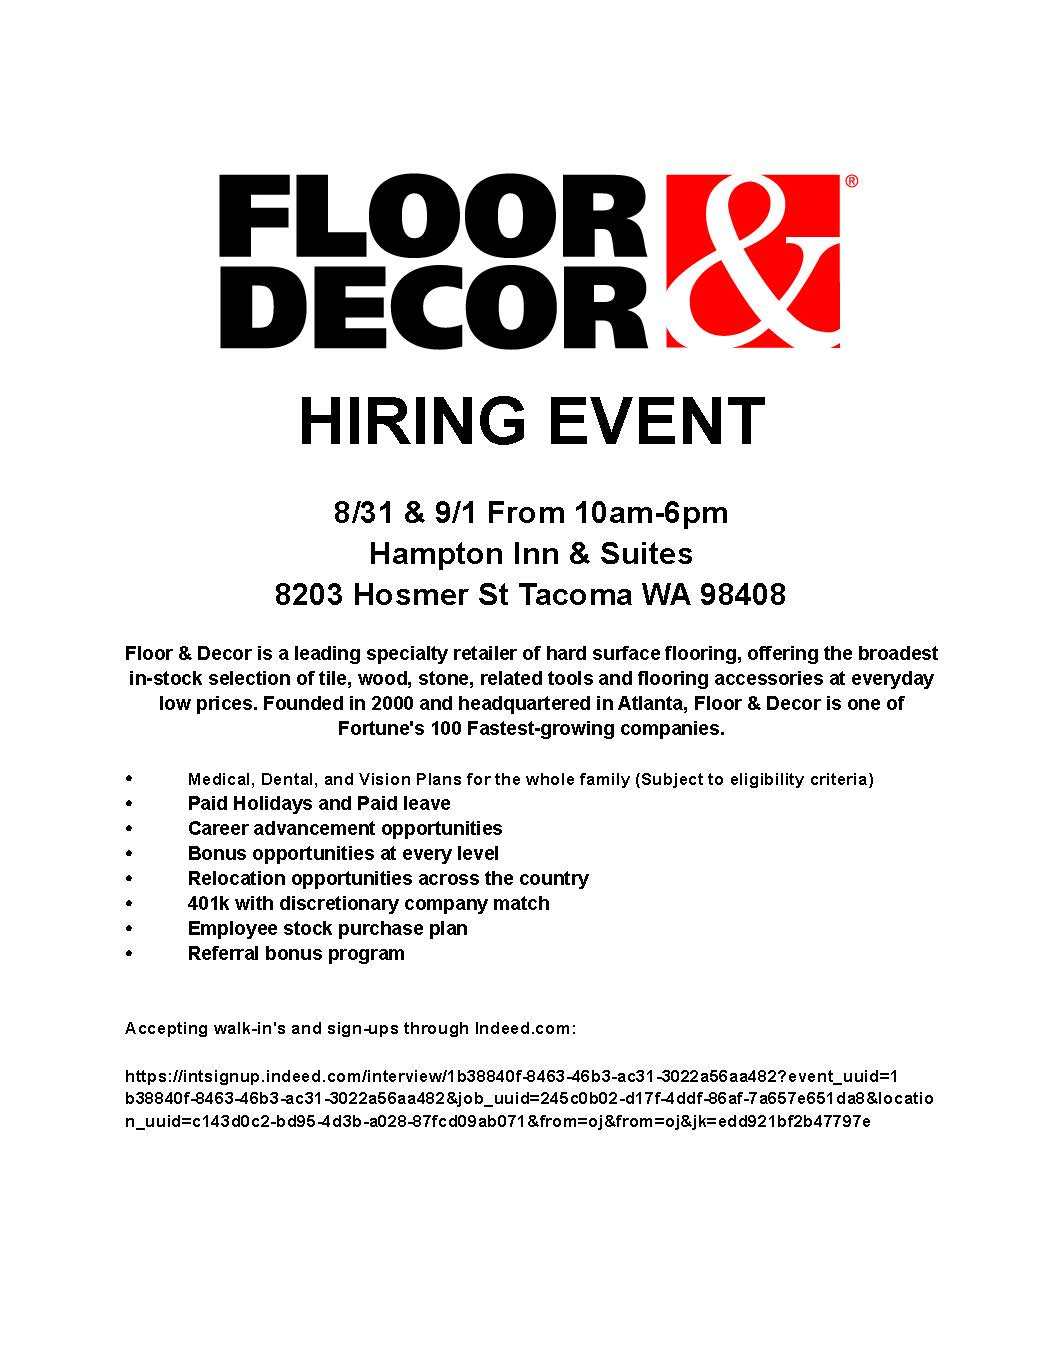 Floor & Decor hiring event flyer